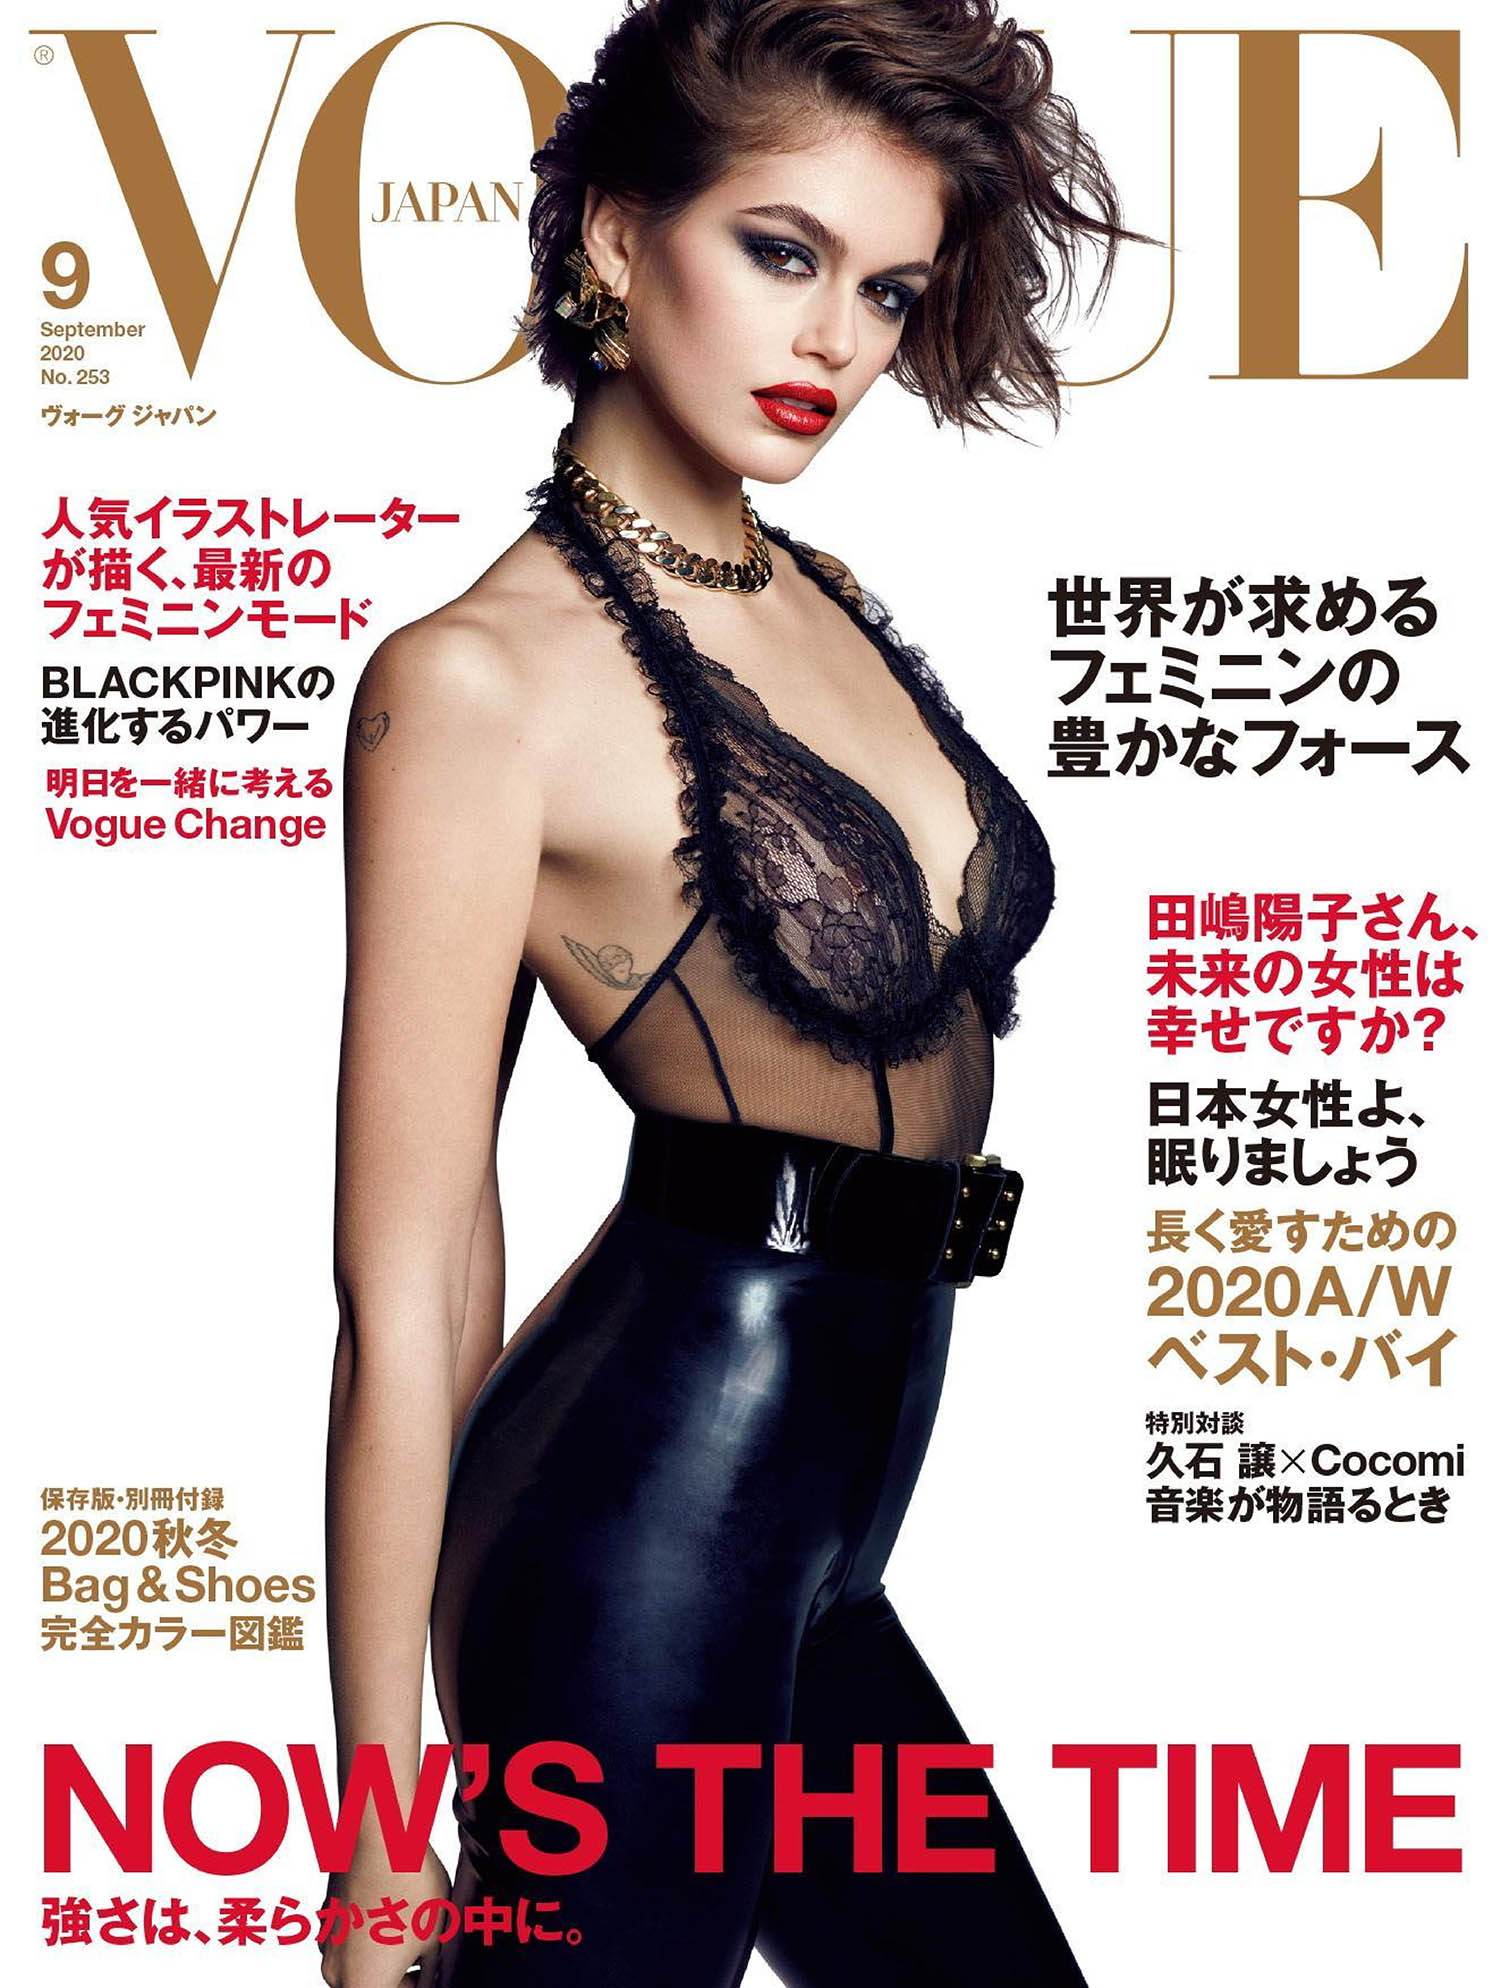 Kaia Gerber covers Vogue Japan September 2020 by Luigi & Iango